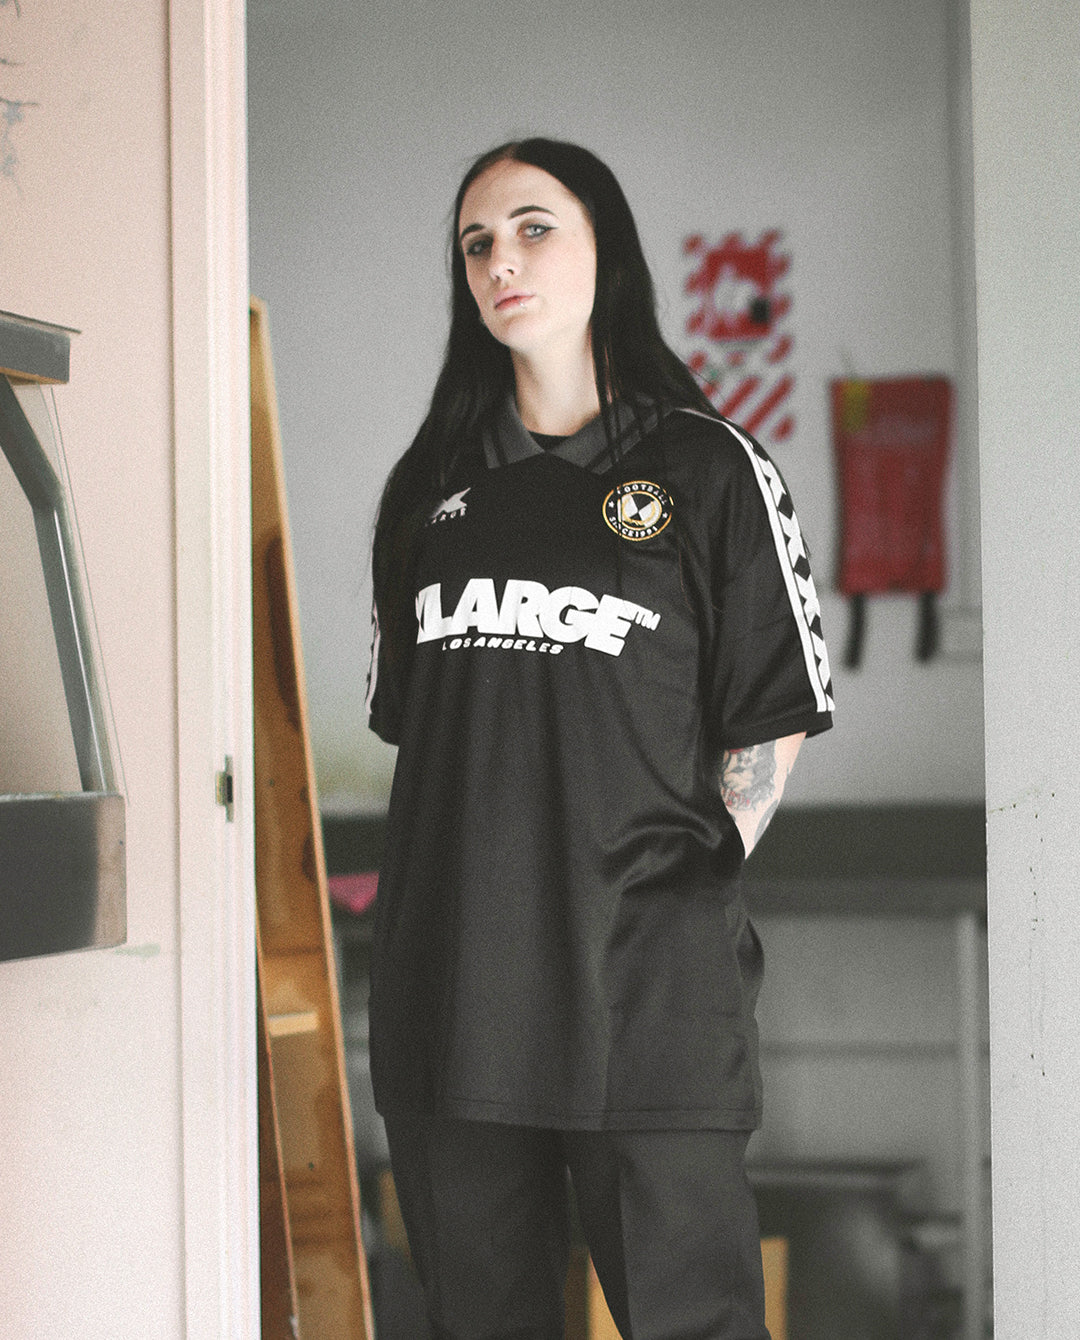 XLarge - Football Shirt - Black